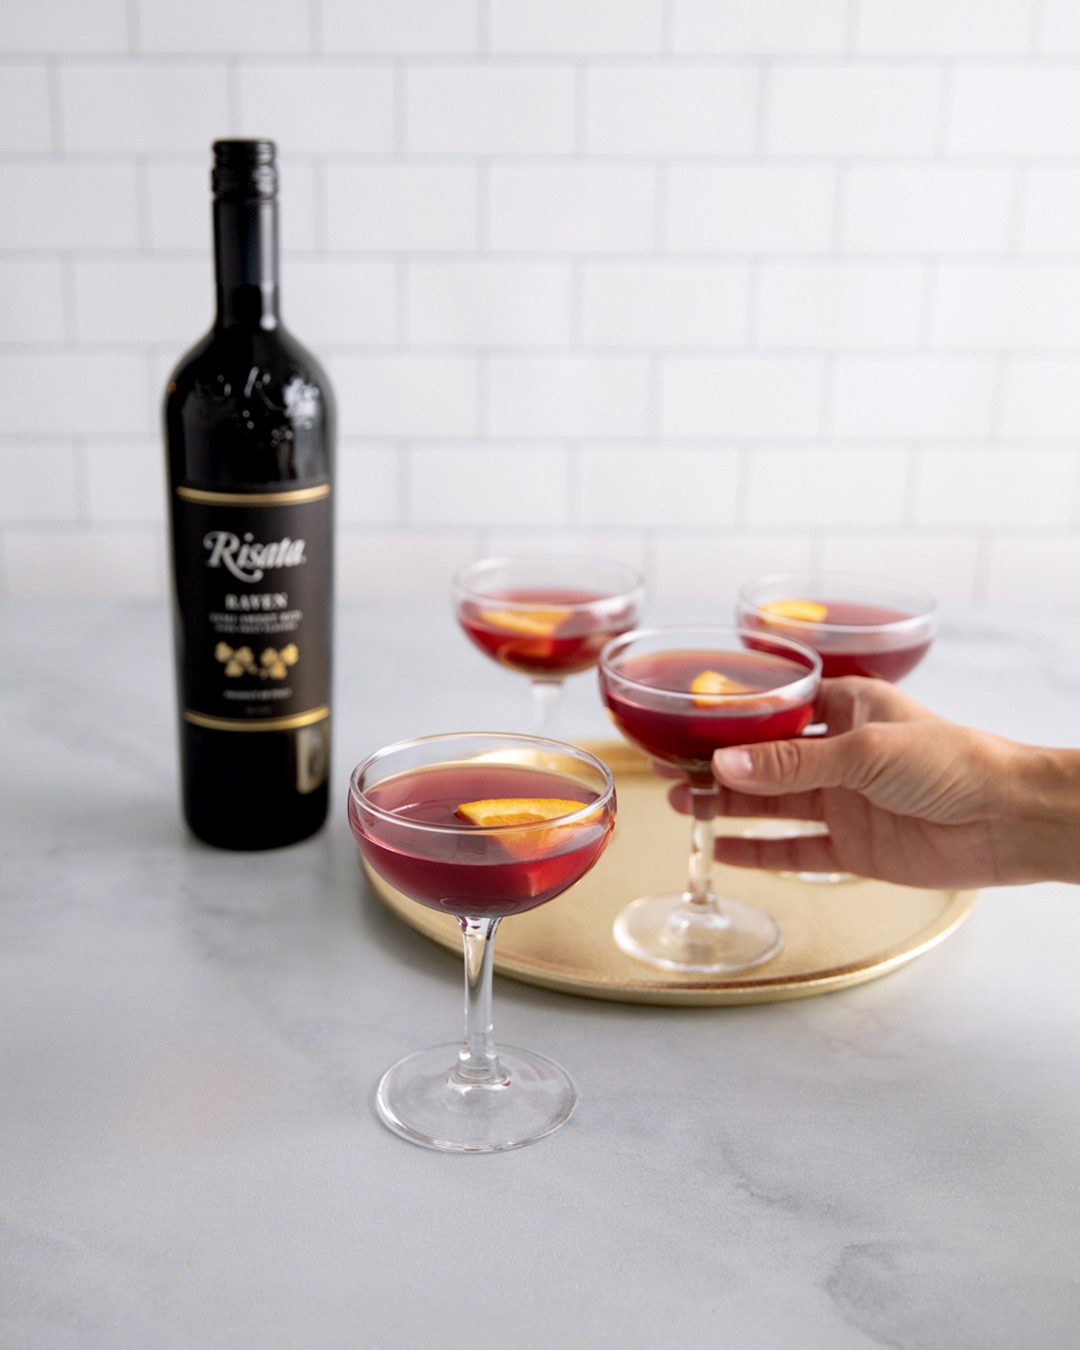 Risata Raven Raven’s Sour Cocktail